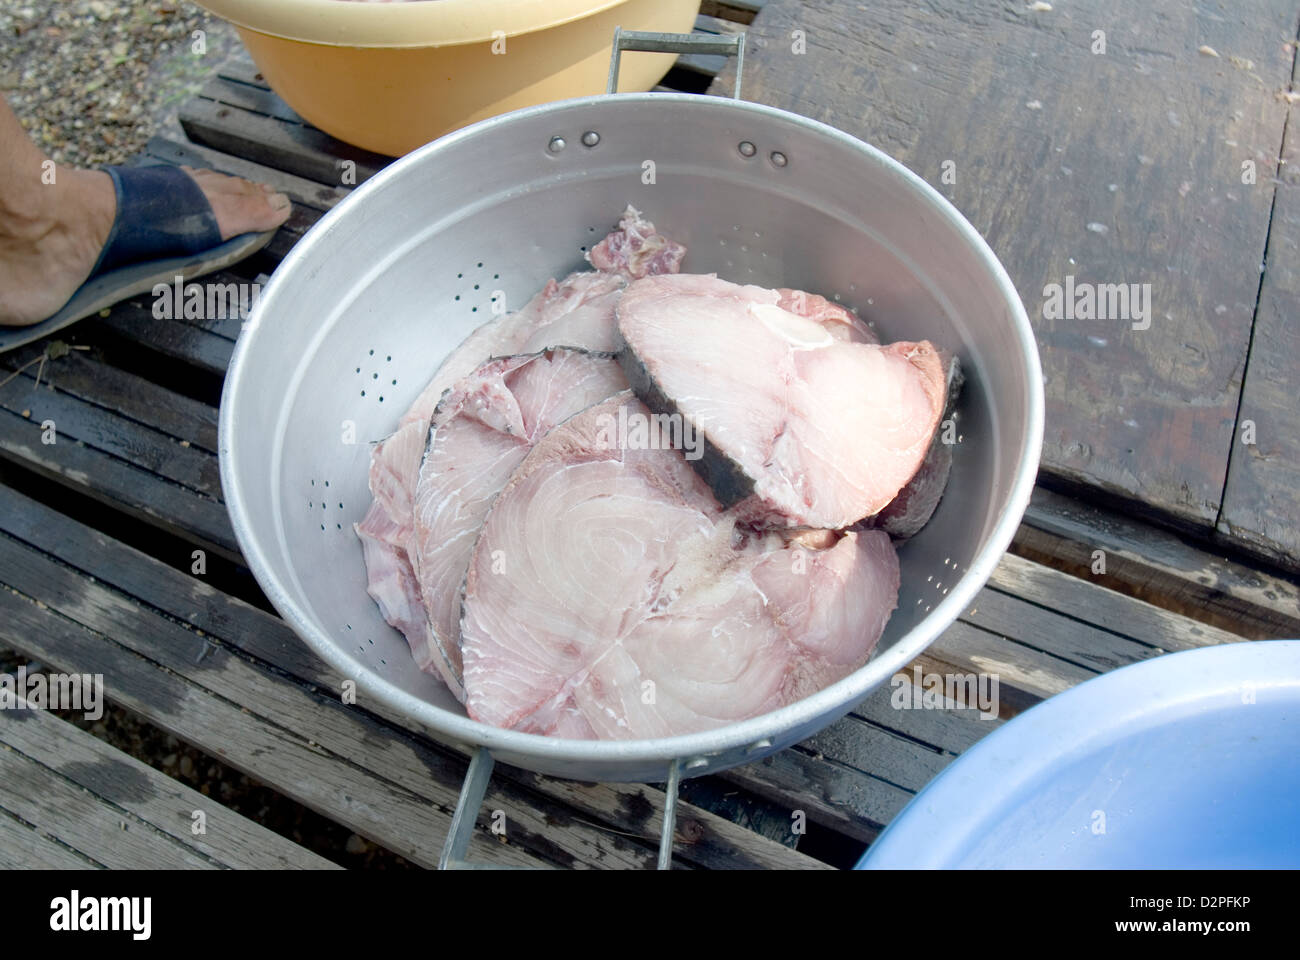 White Meat Tuna Albacore fish being prepared Stock Photo